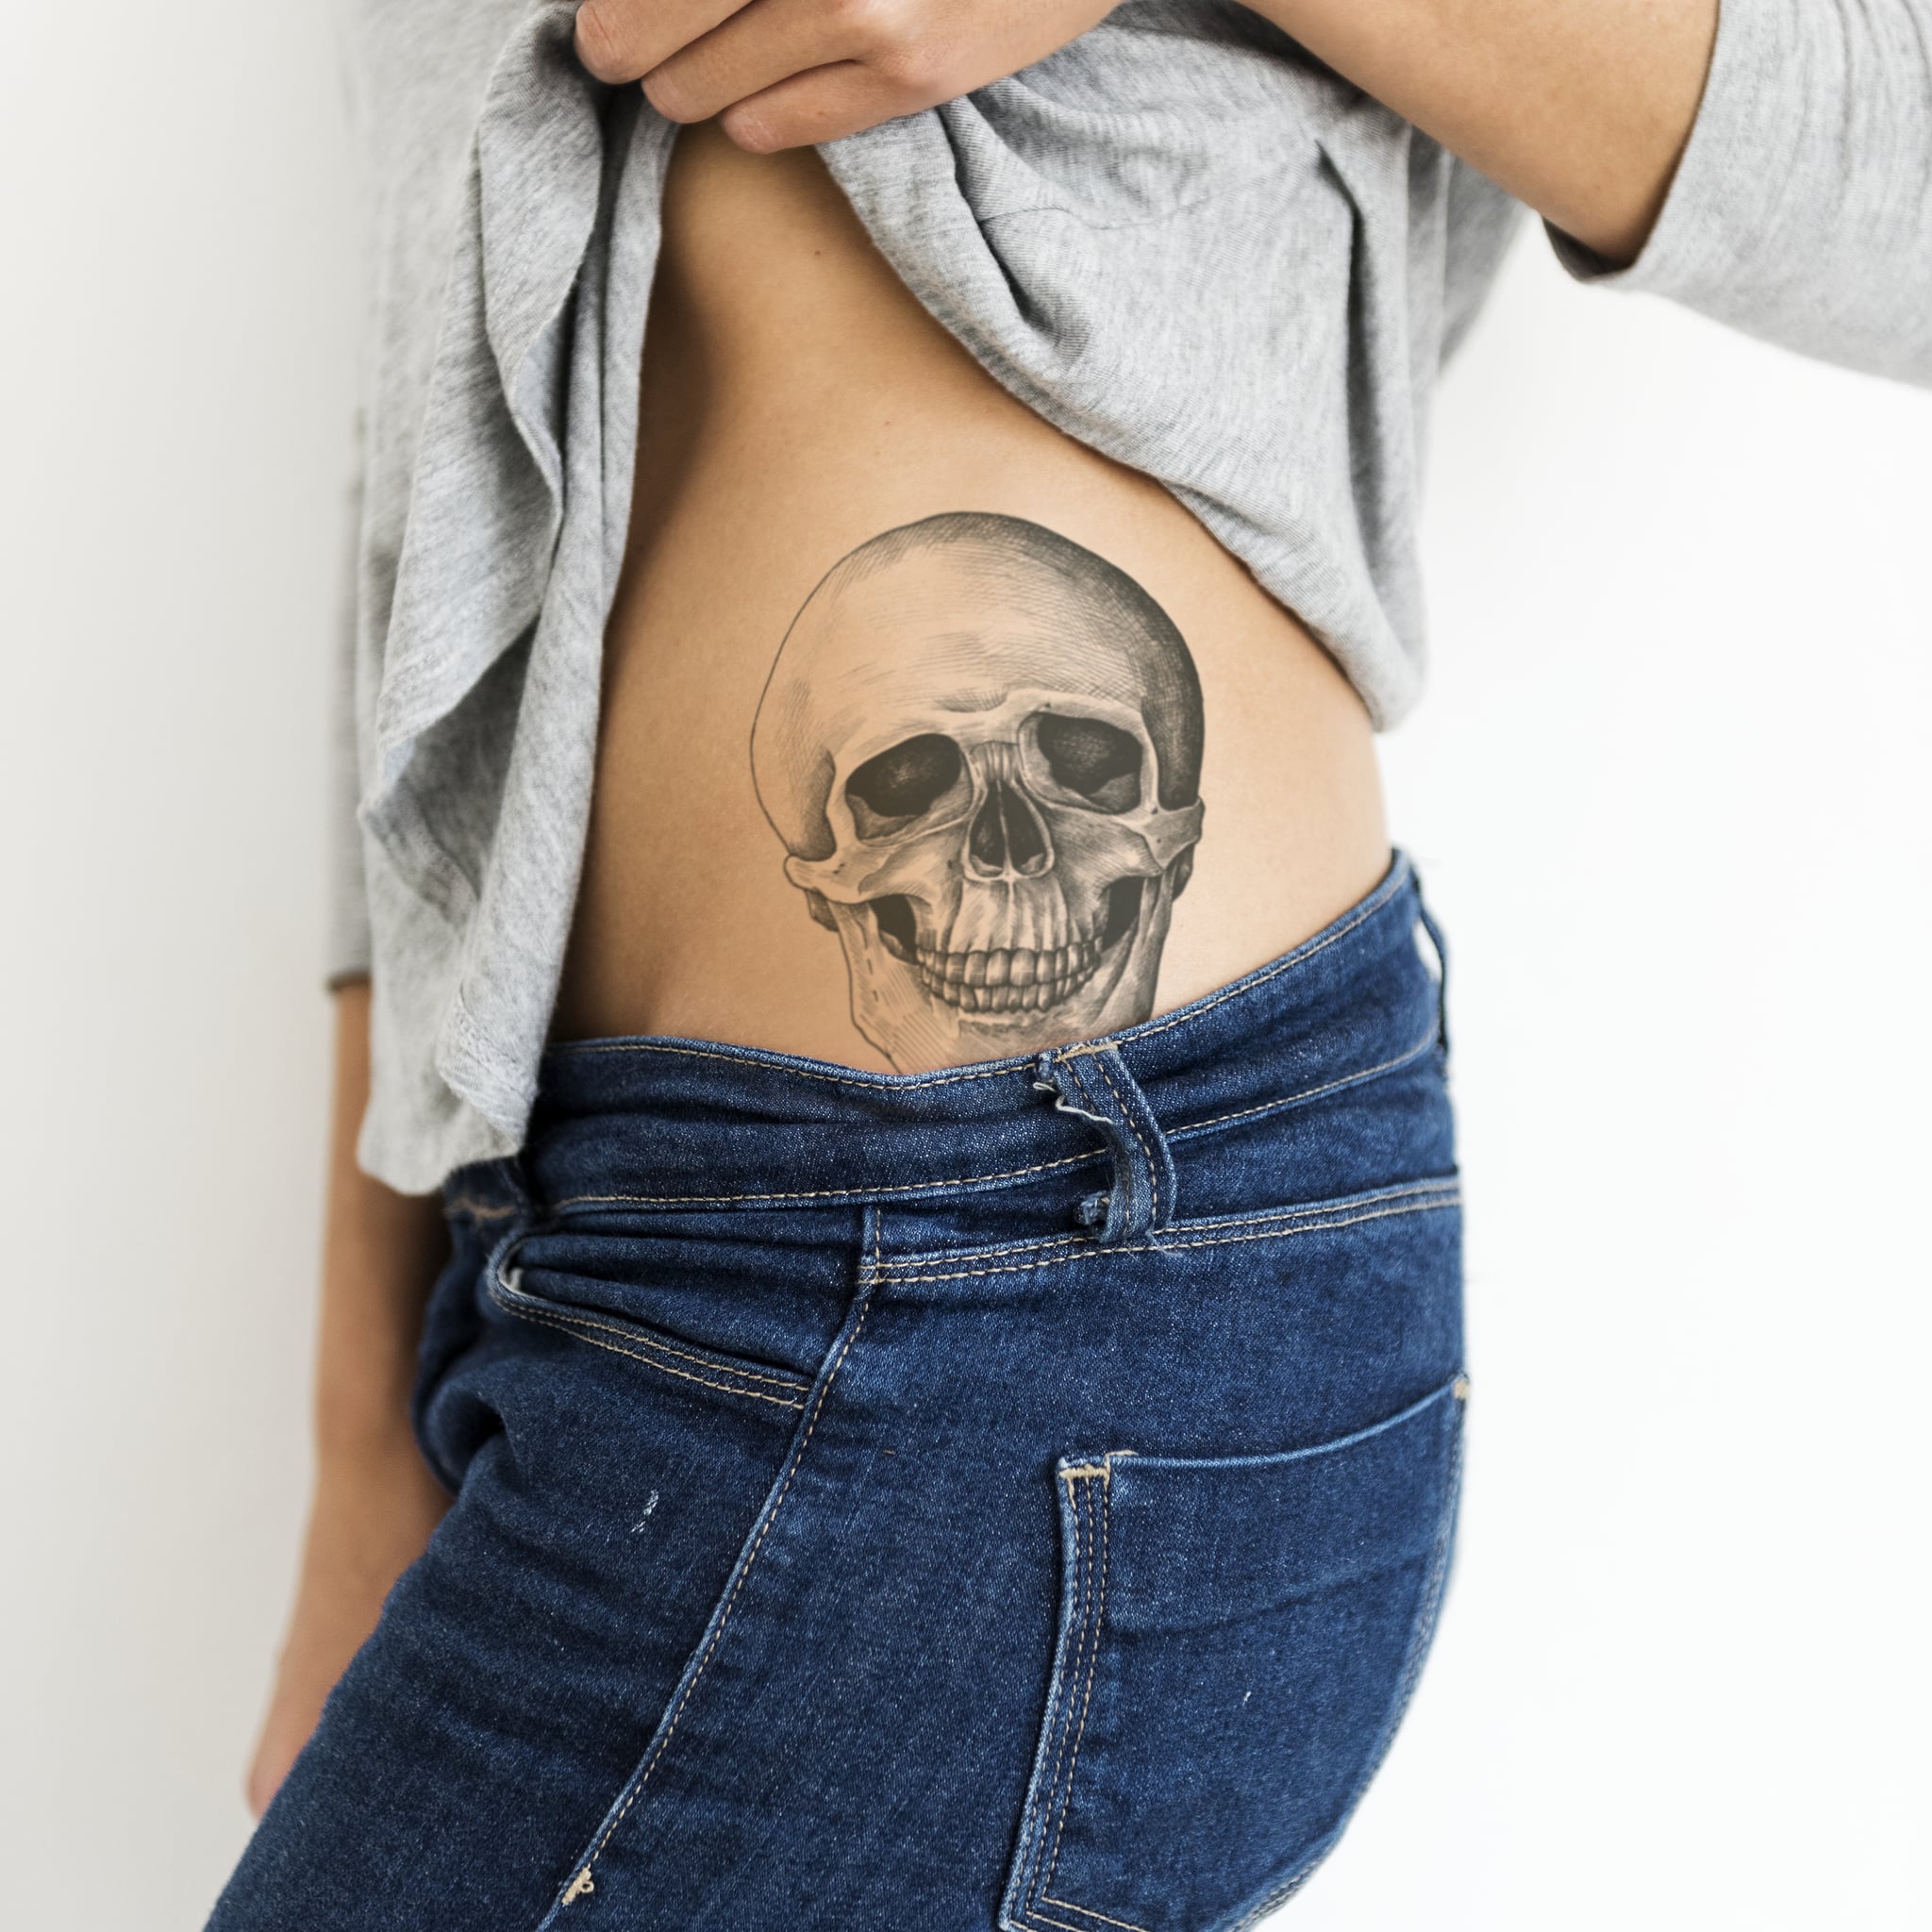 Best Halloween Tattoos | POPSUGAR Beauty